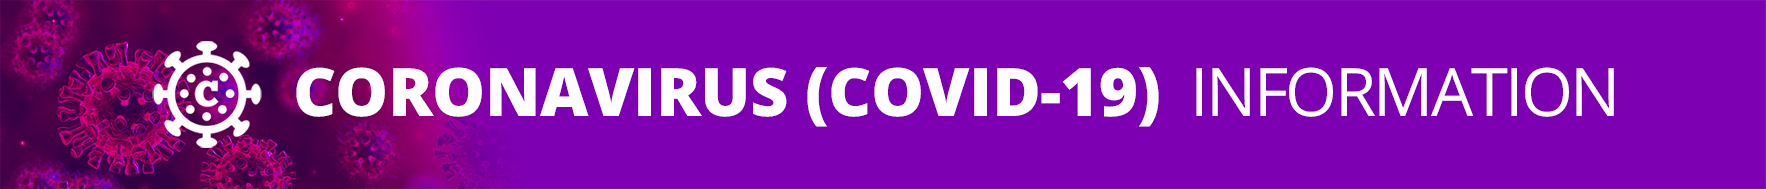 Coronavirus (COVID-19) information page header